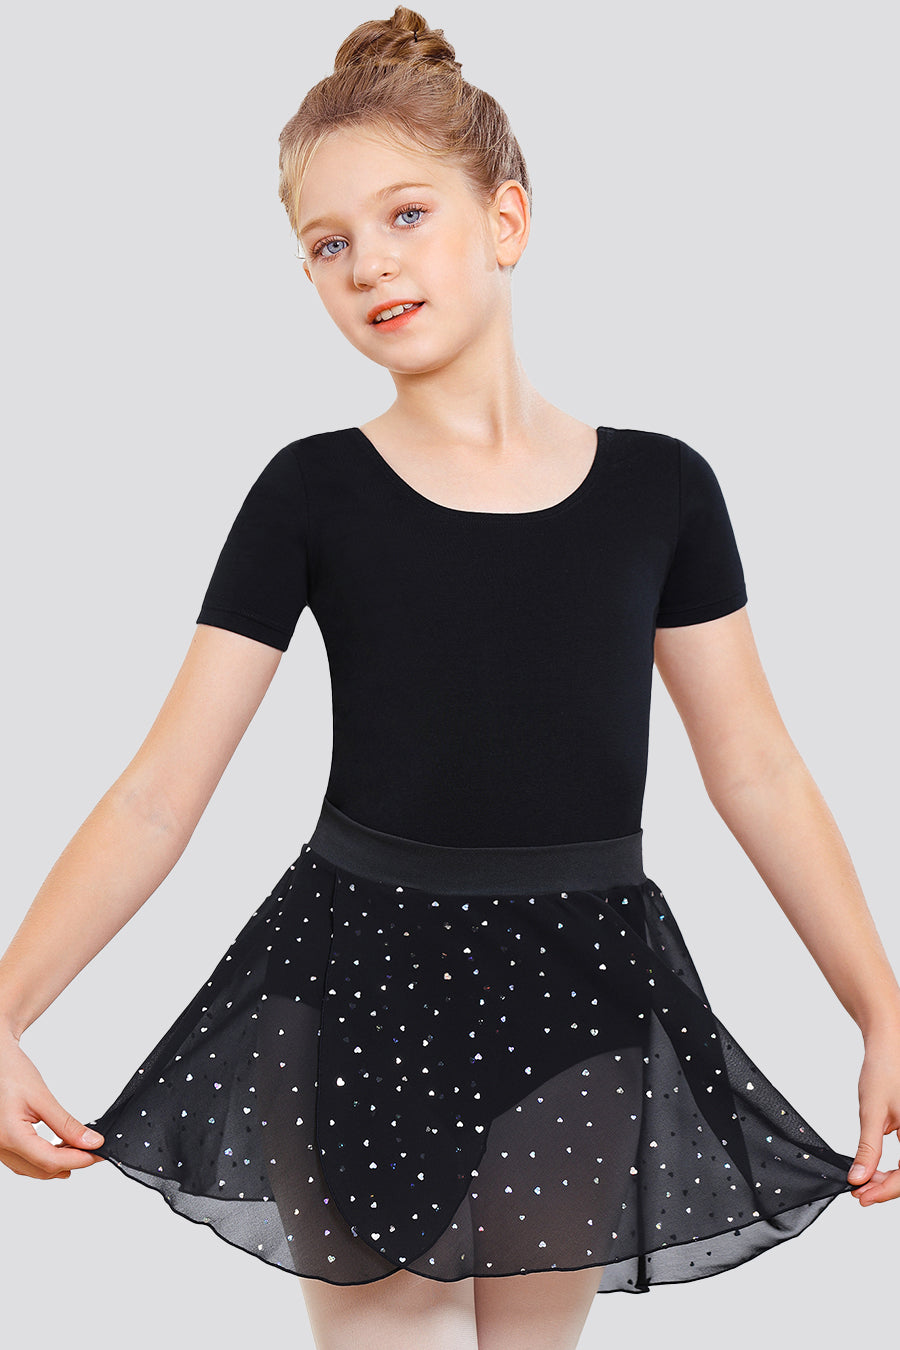 ballet chiffon skirt black shiny front